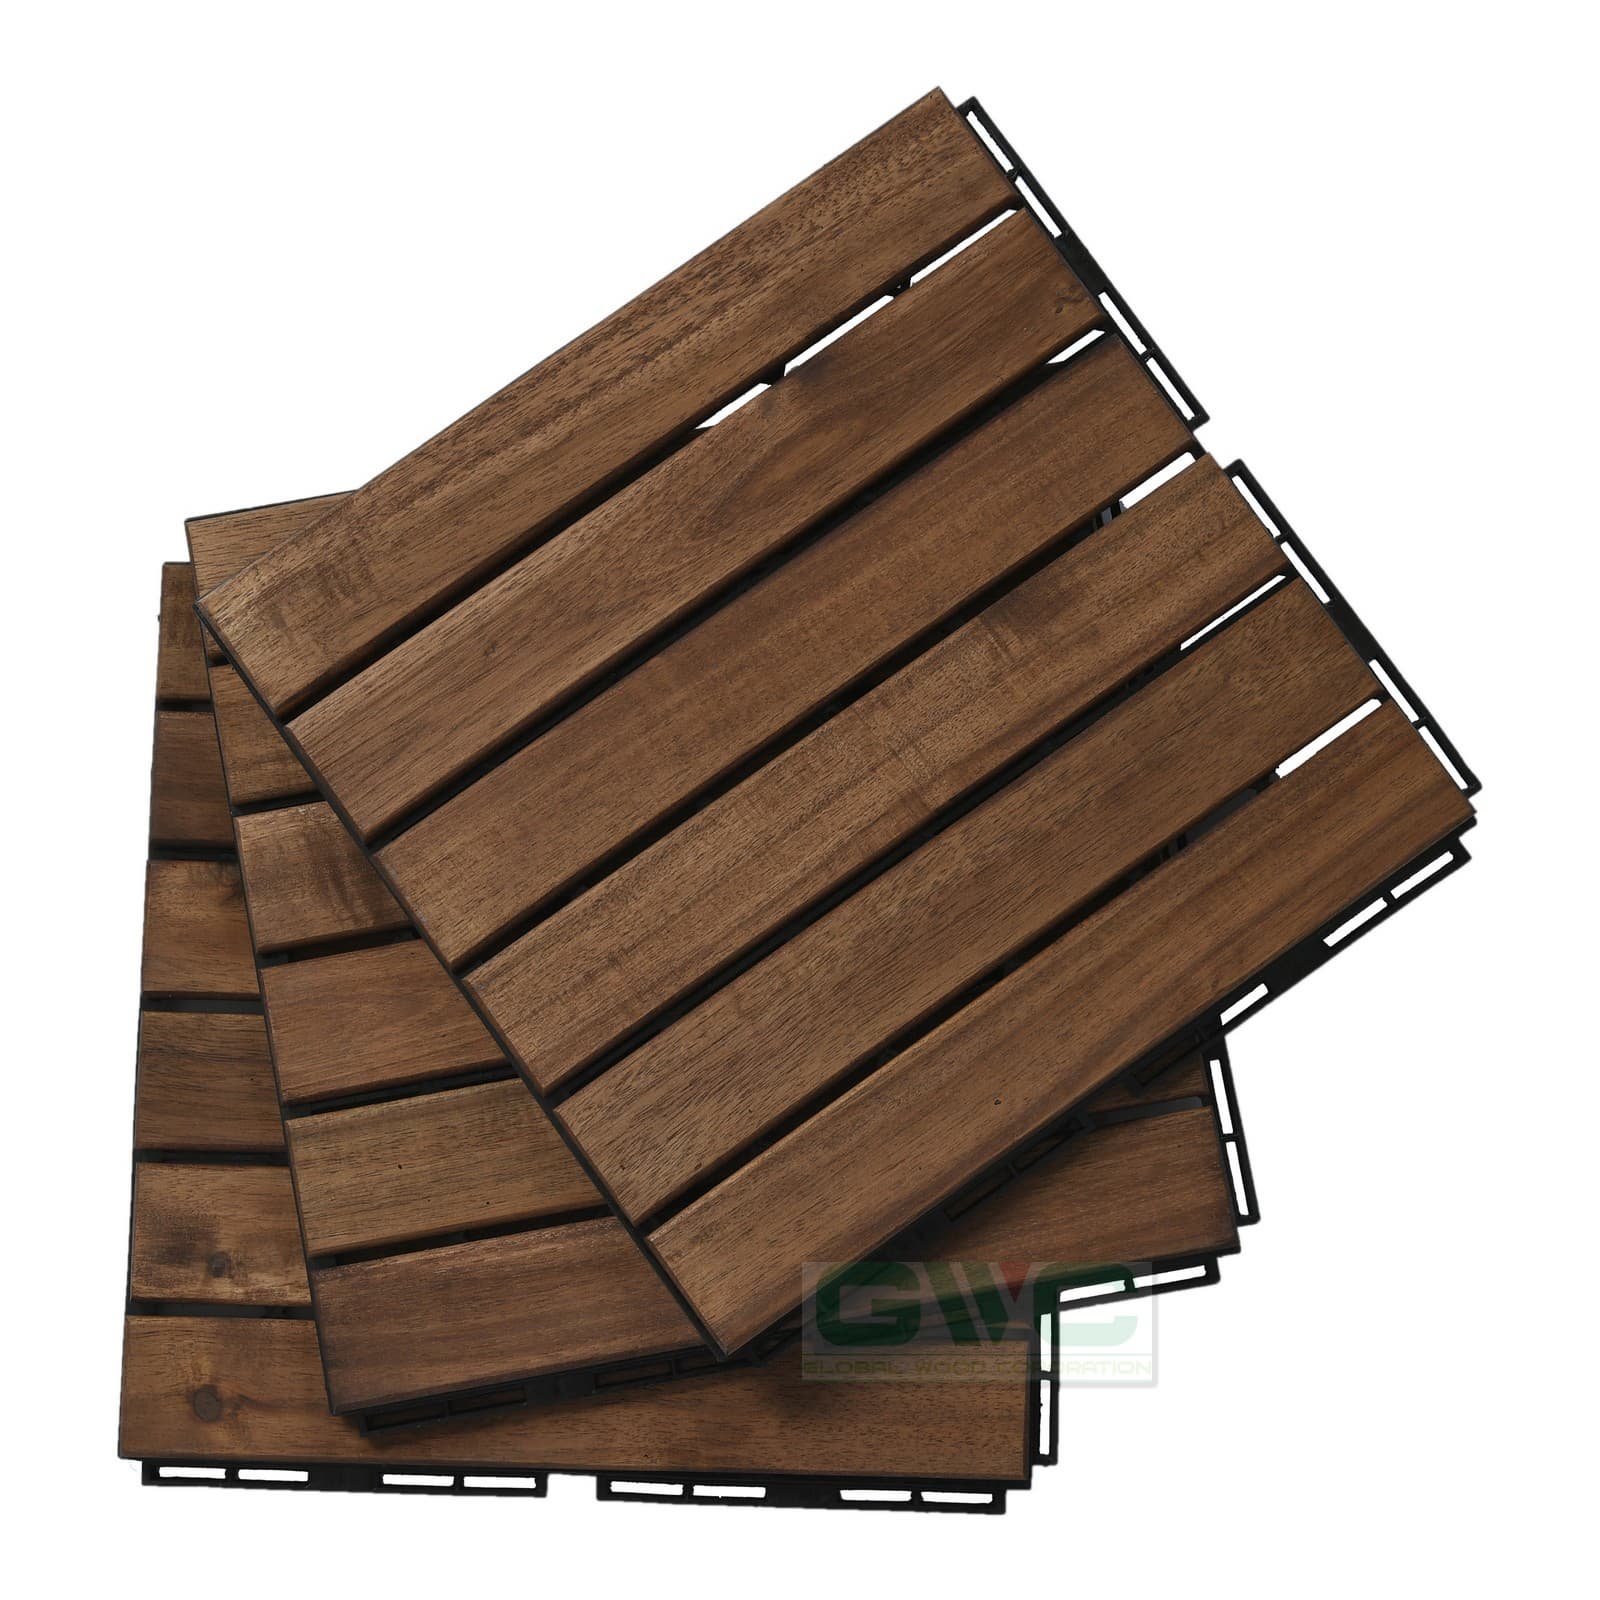 Acacia Wood Interlocking Deck Tiles 6slats  From Vietnam